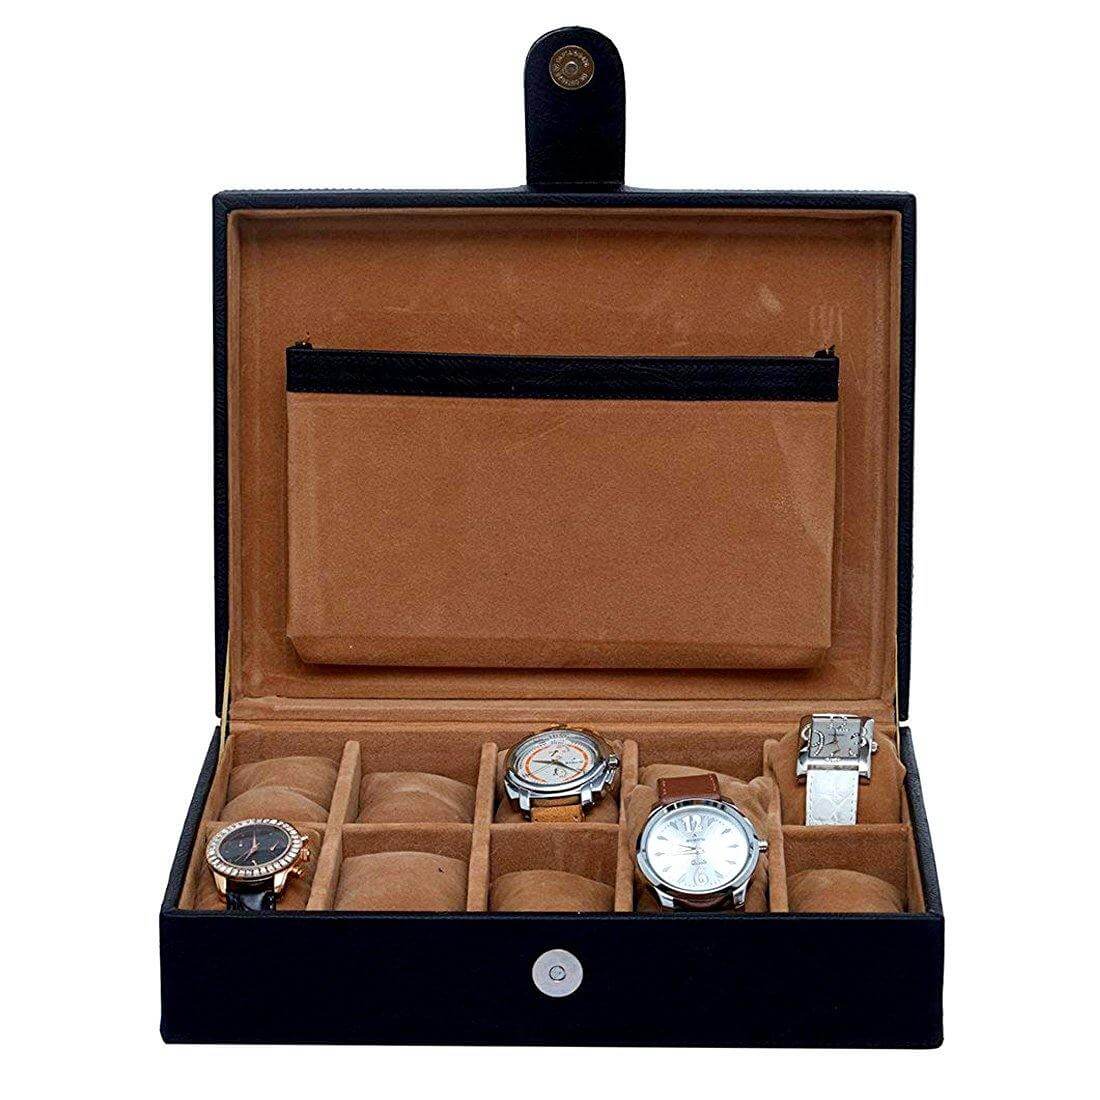 10 Slots Elegant Watch Organizer Box With Plain PU Leather Finish